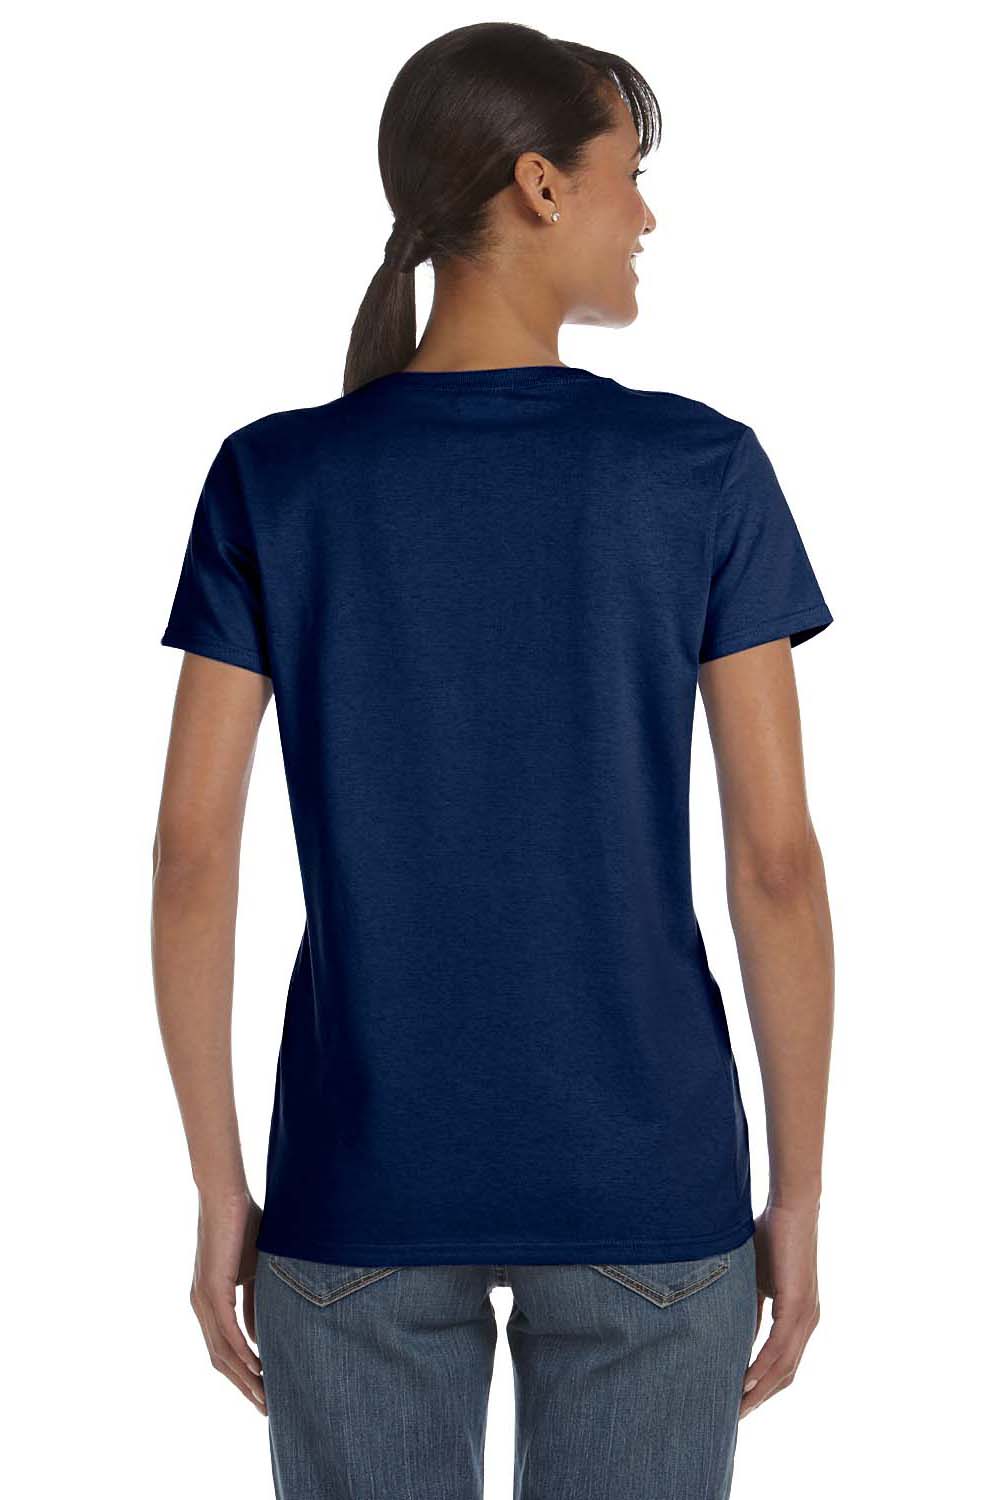 Gildan G500L Womens Short Sleeve Crewneck T-Shirt Navy Blue Back